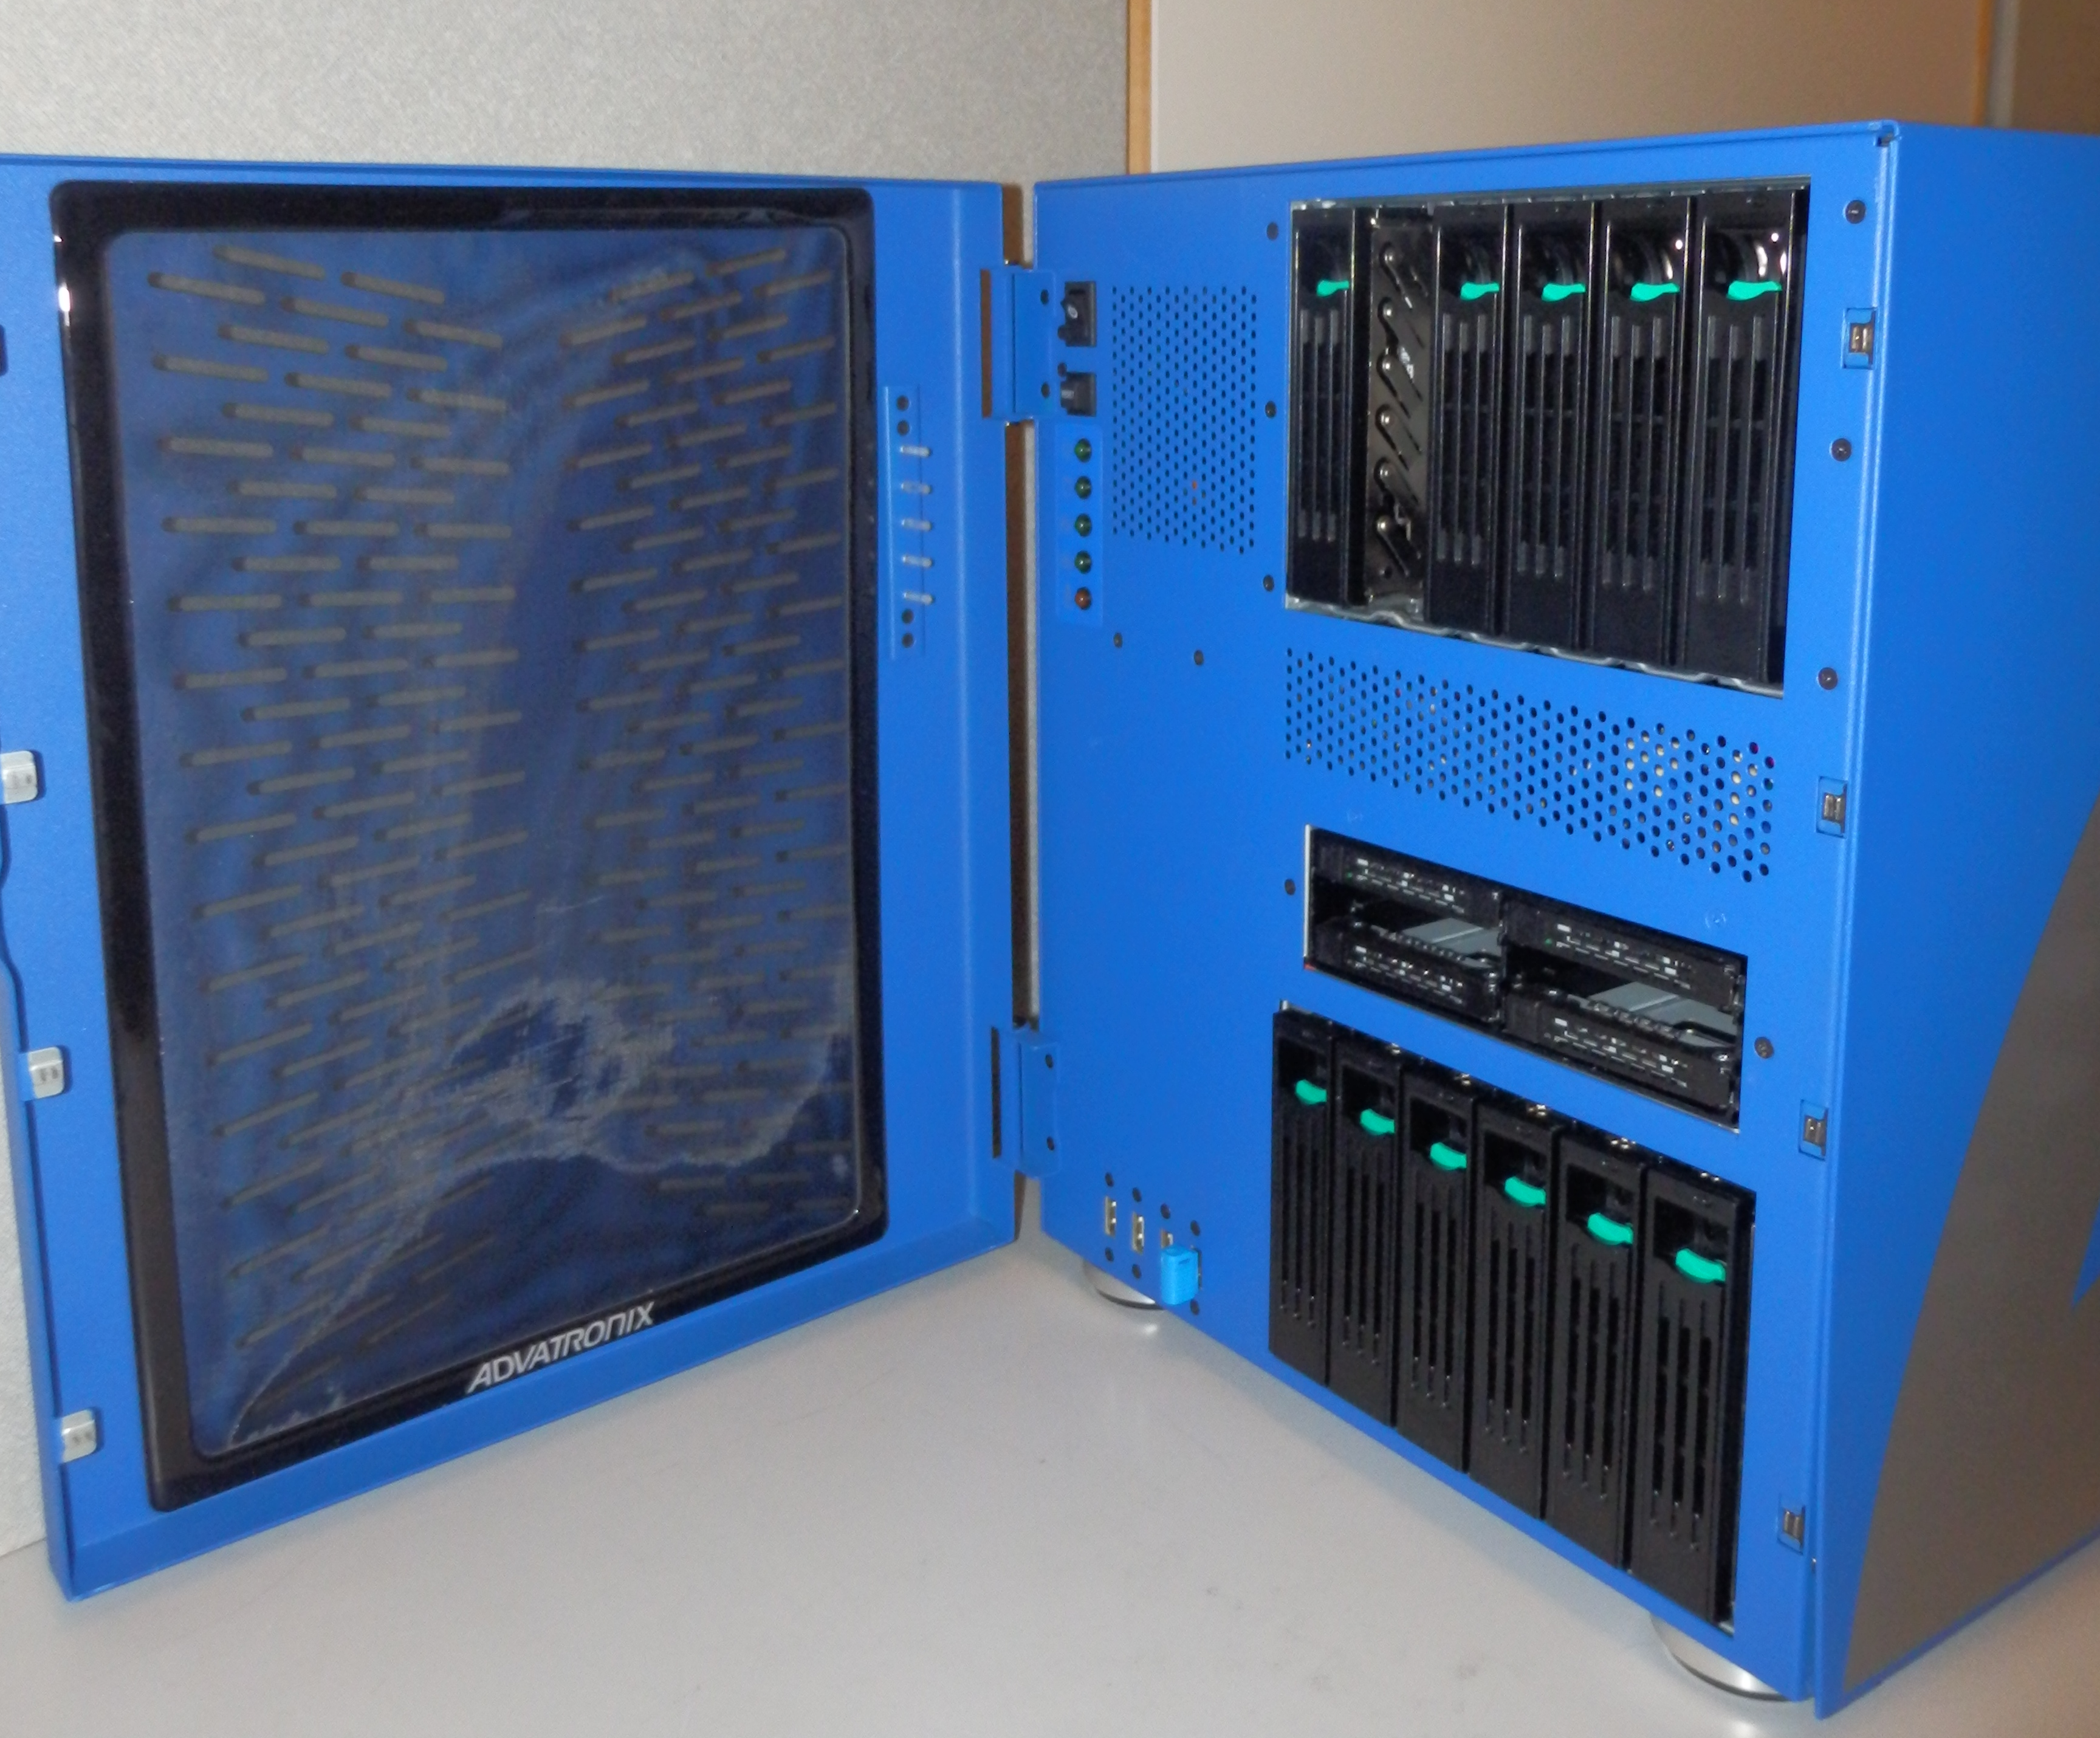 Advatronix Cirrus 1200: a Storage Under Your Desk